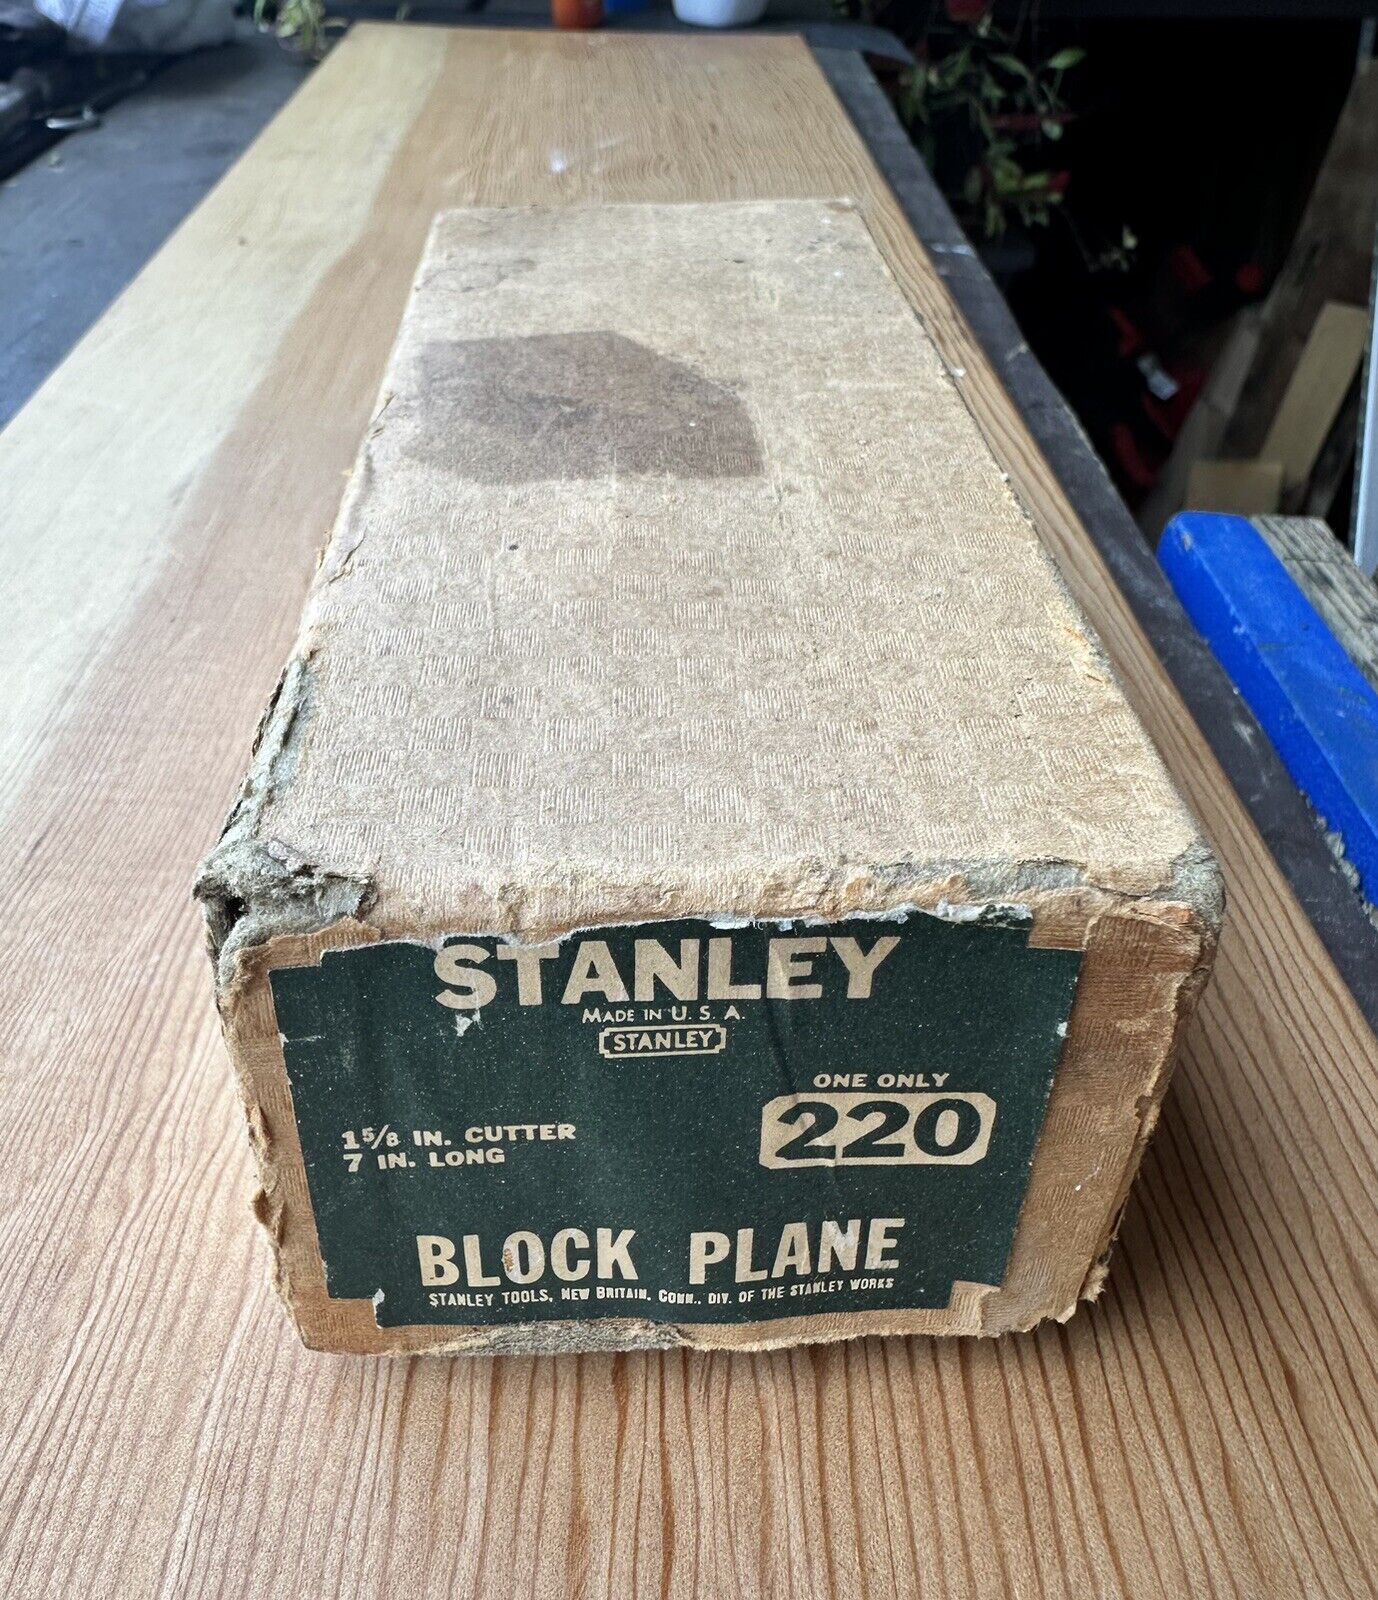 Stanley No 220 Block Plane in Original Box. Made in USA, Vintage